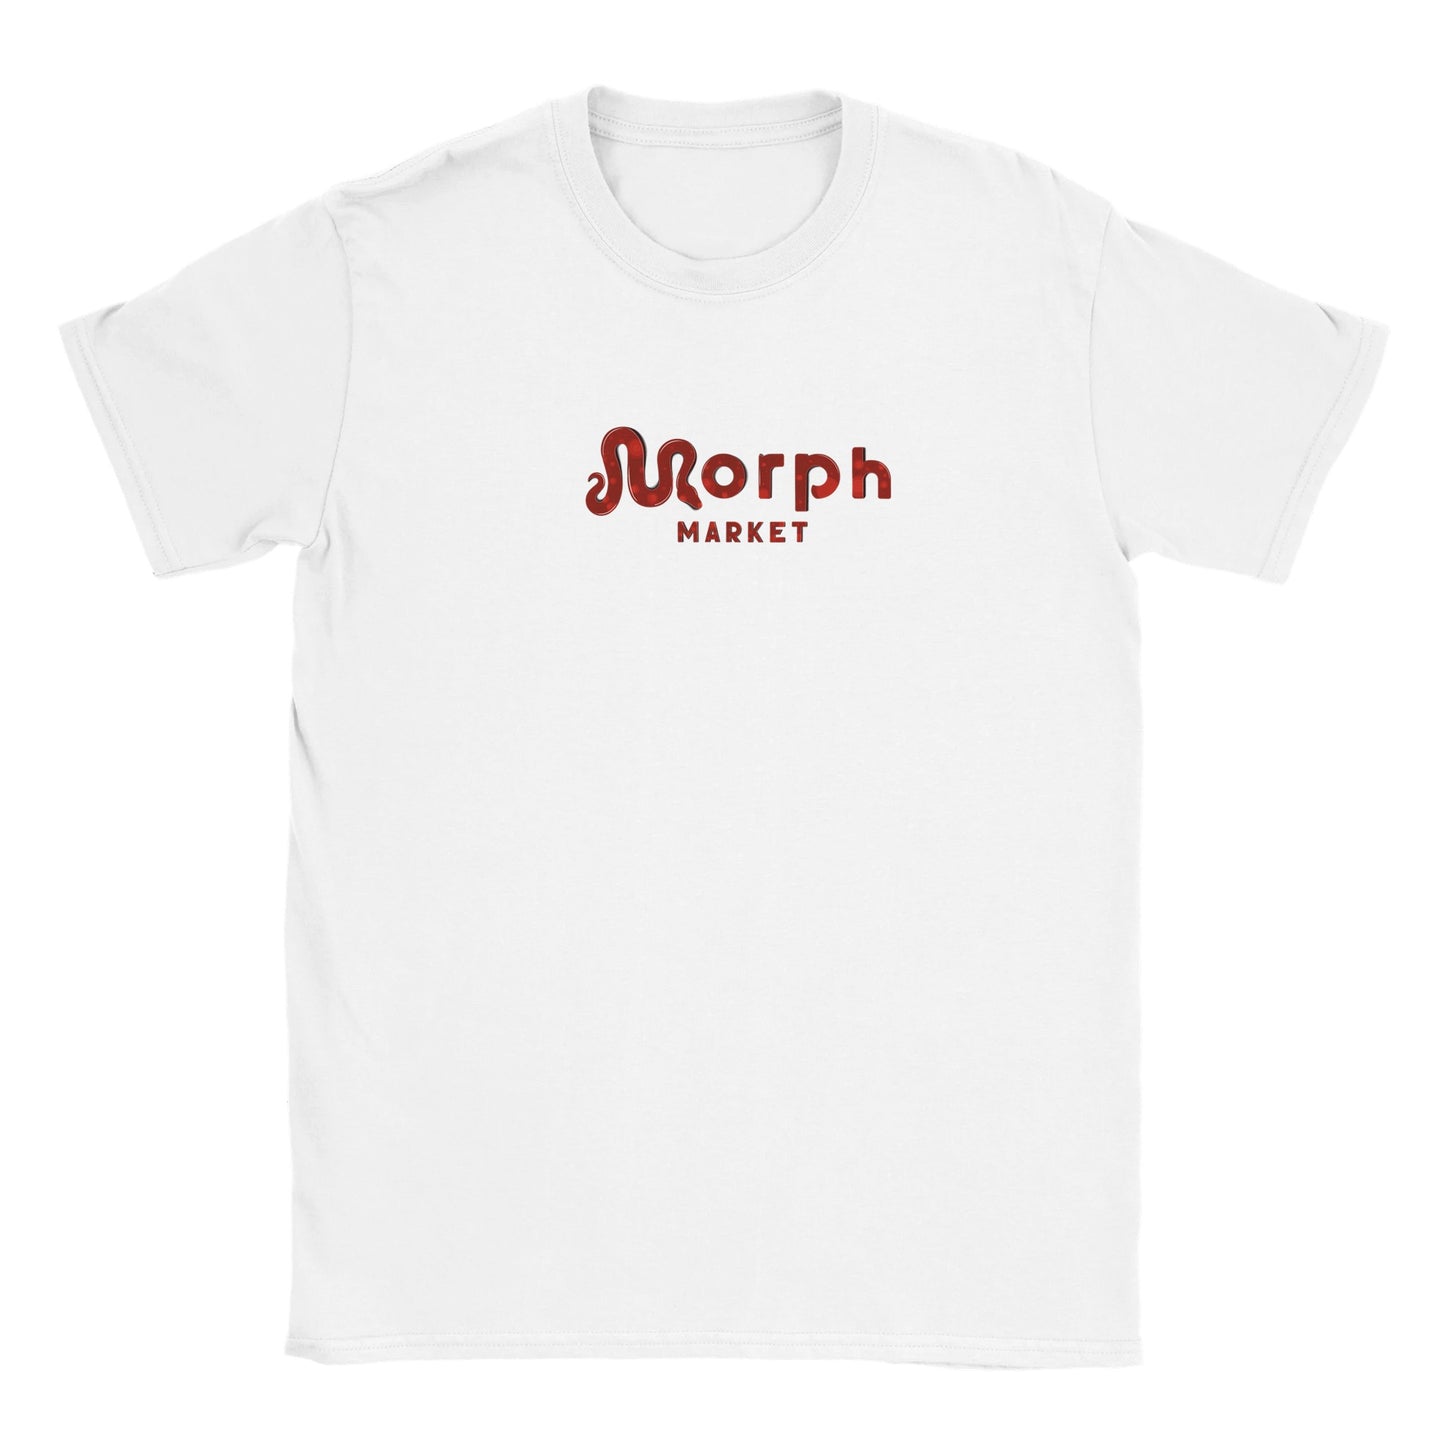 Morph Market (Red Circles) - Classic Kids Crewneck T-shirt